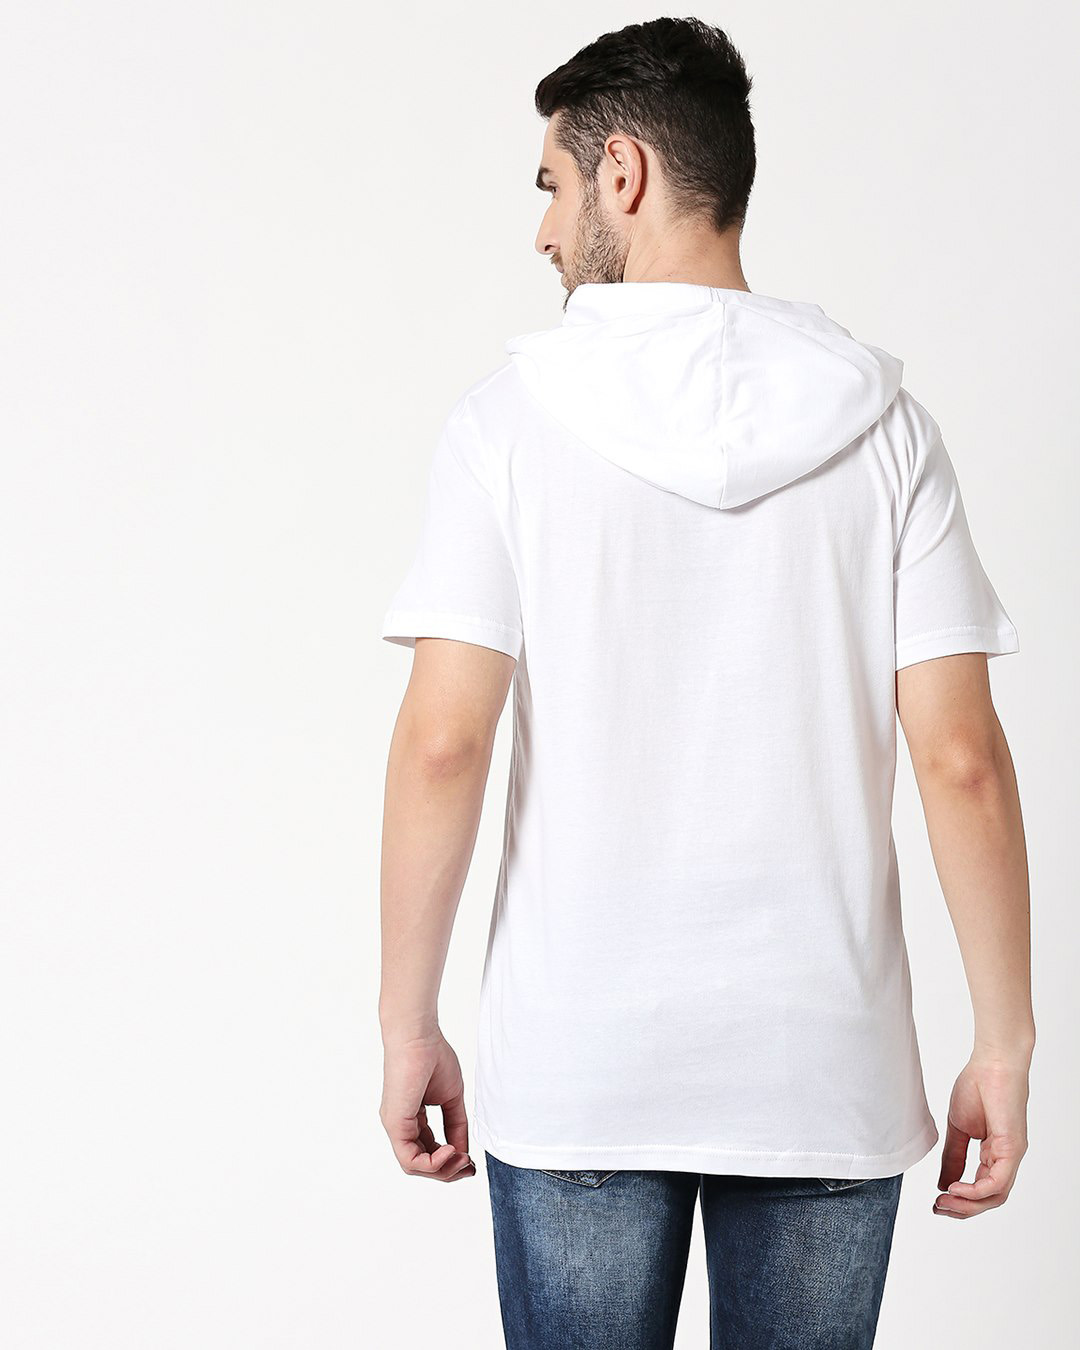 Shop Angry Zip Half Sleeve Hoodie T-Shirt White-Back